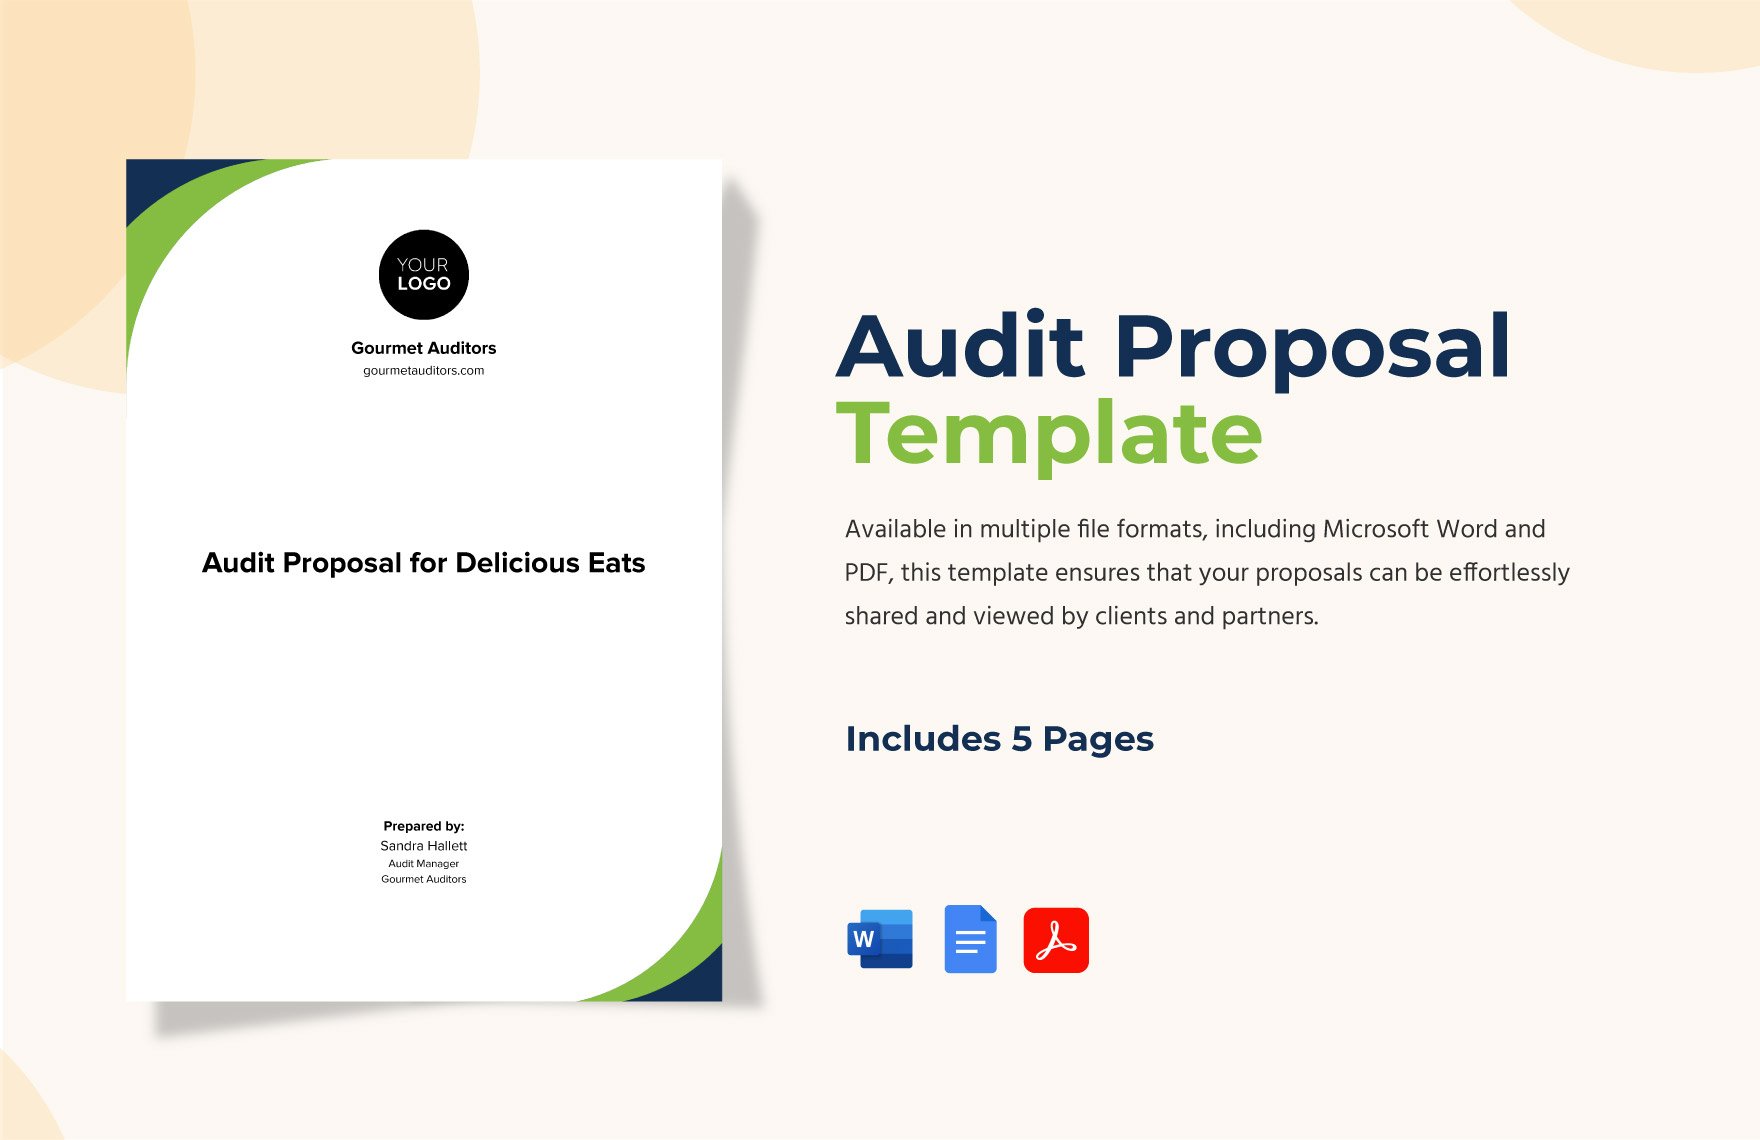 Audit Proposal Template